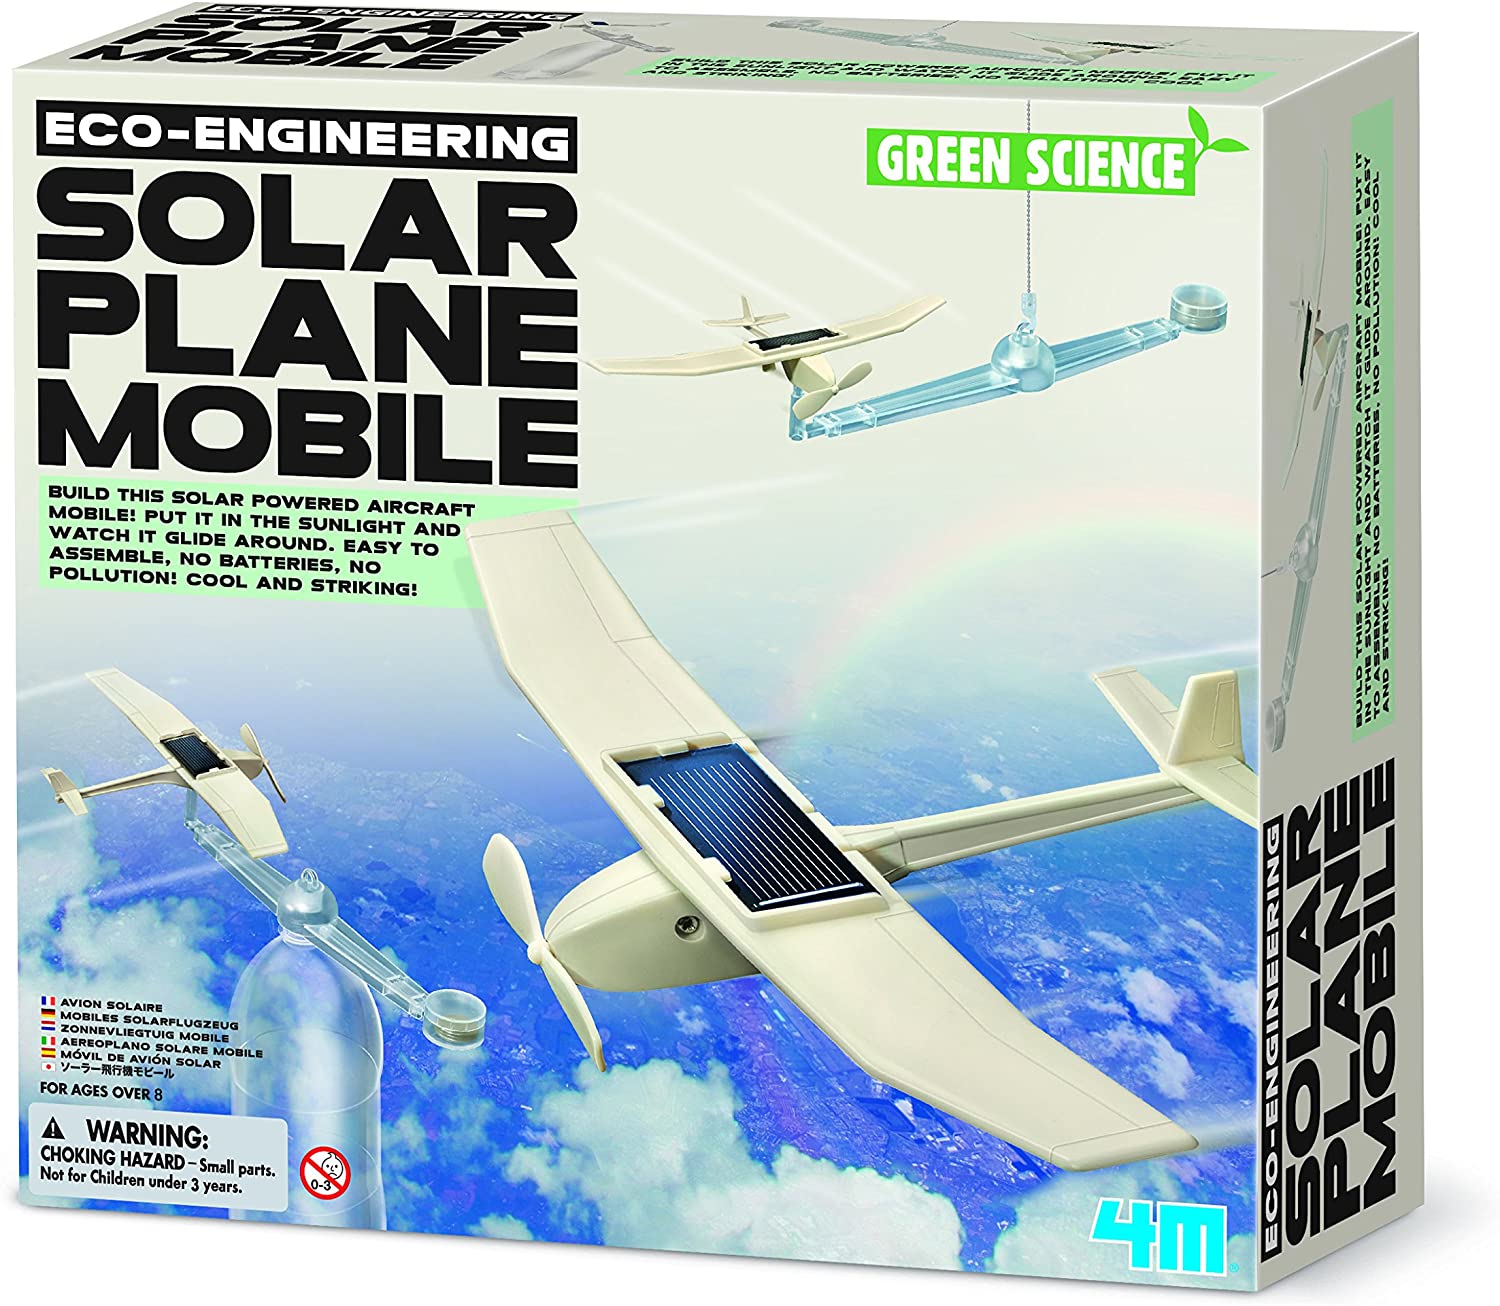 4M Green Science Eco-Engineering Solar Plane Mobile Kit